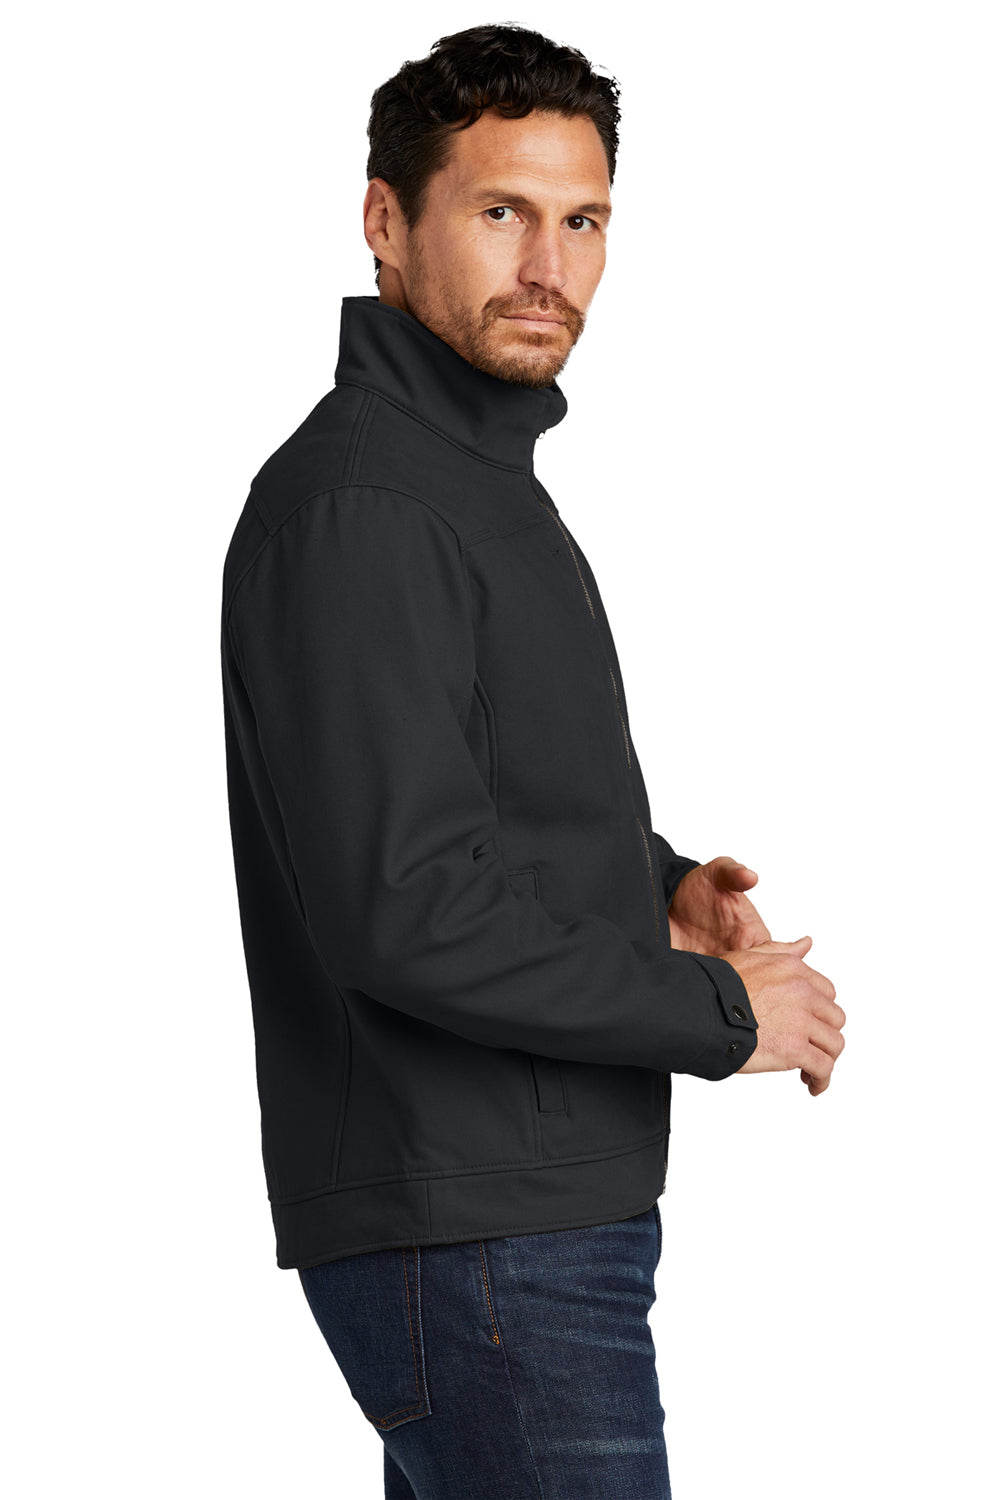 CornerStone Mens Duck Cloth Full Zip Jacket Charcoal Grey Side